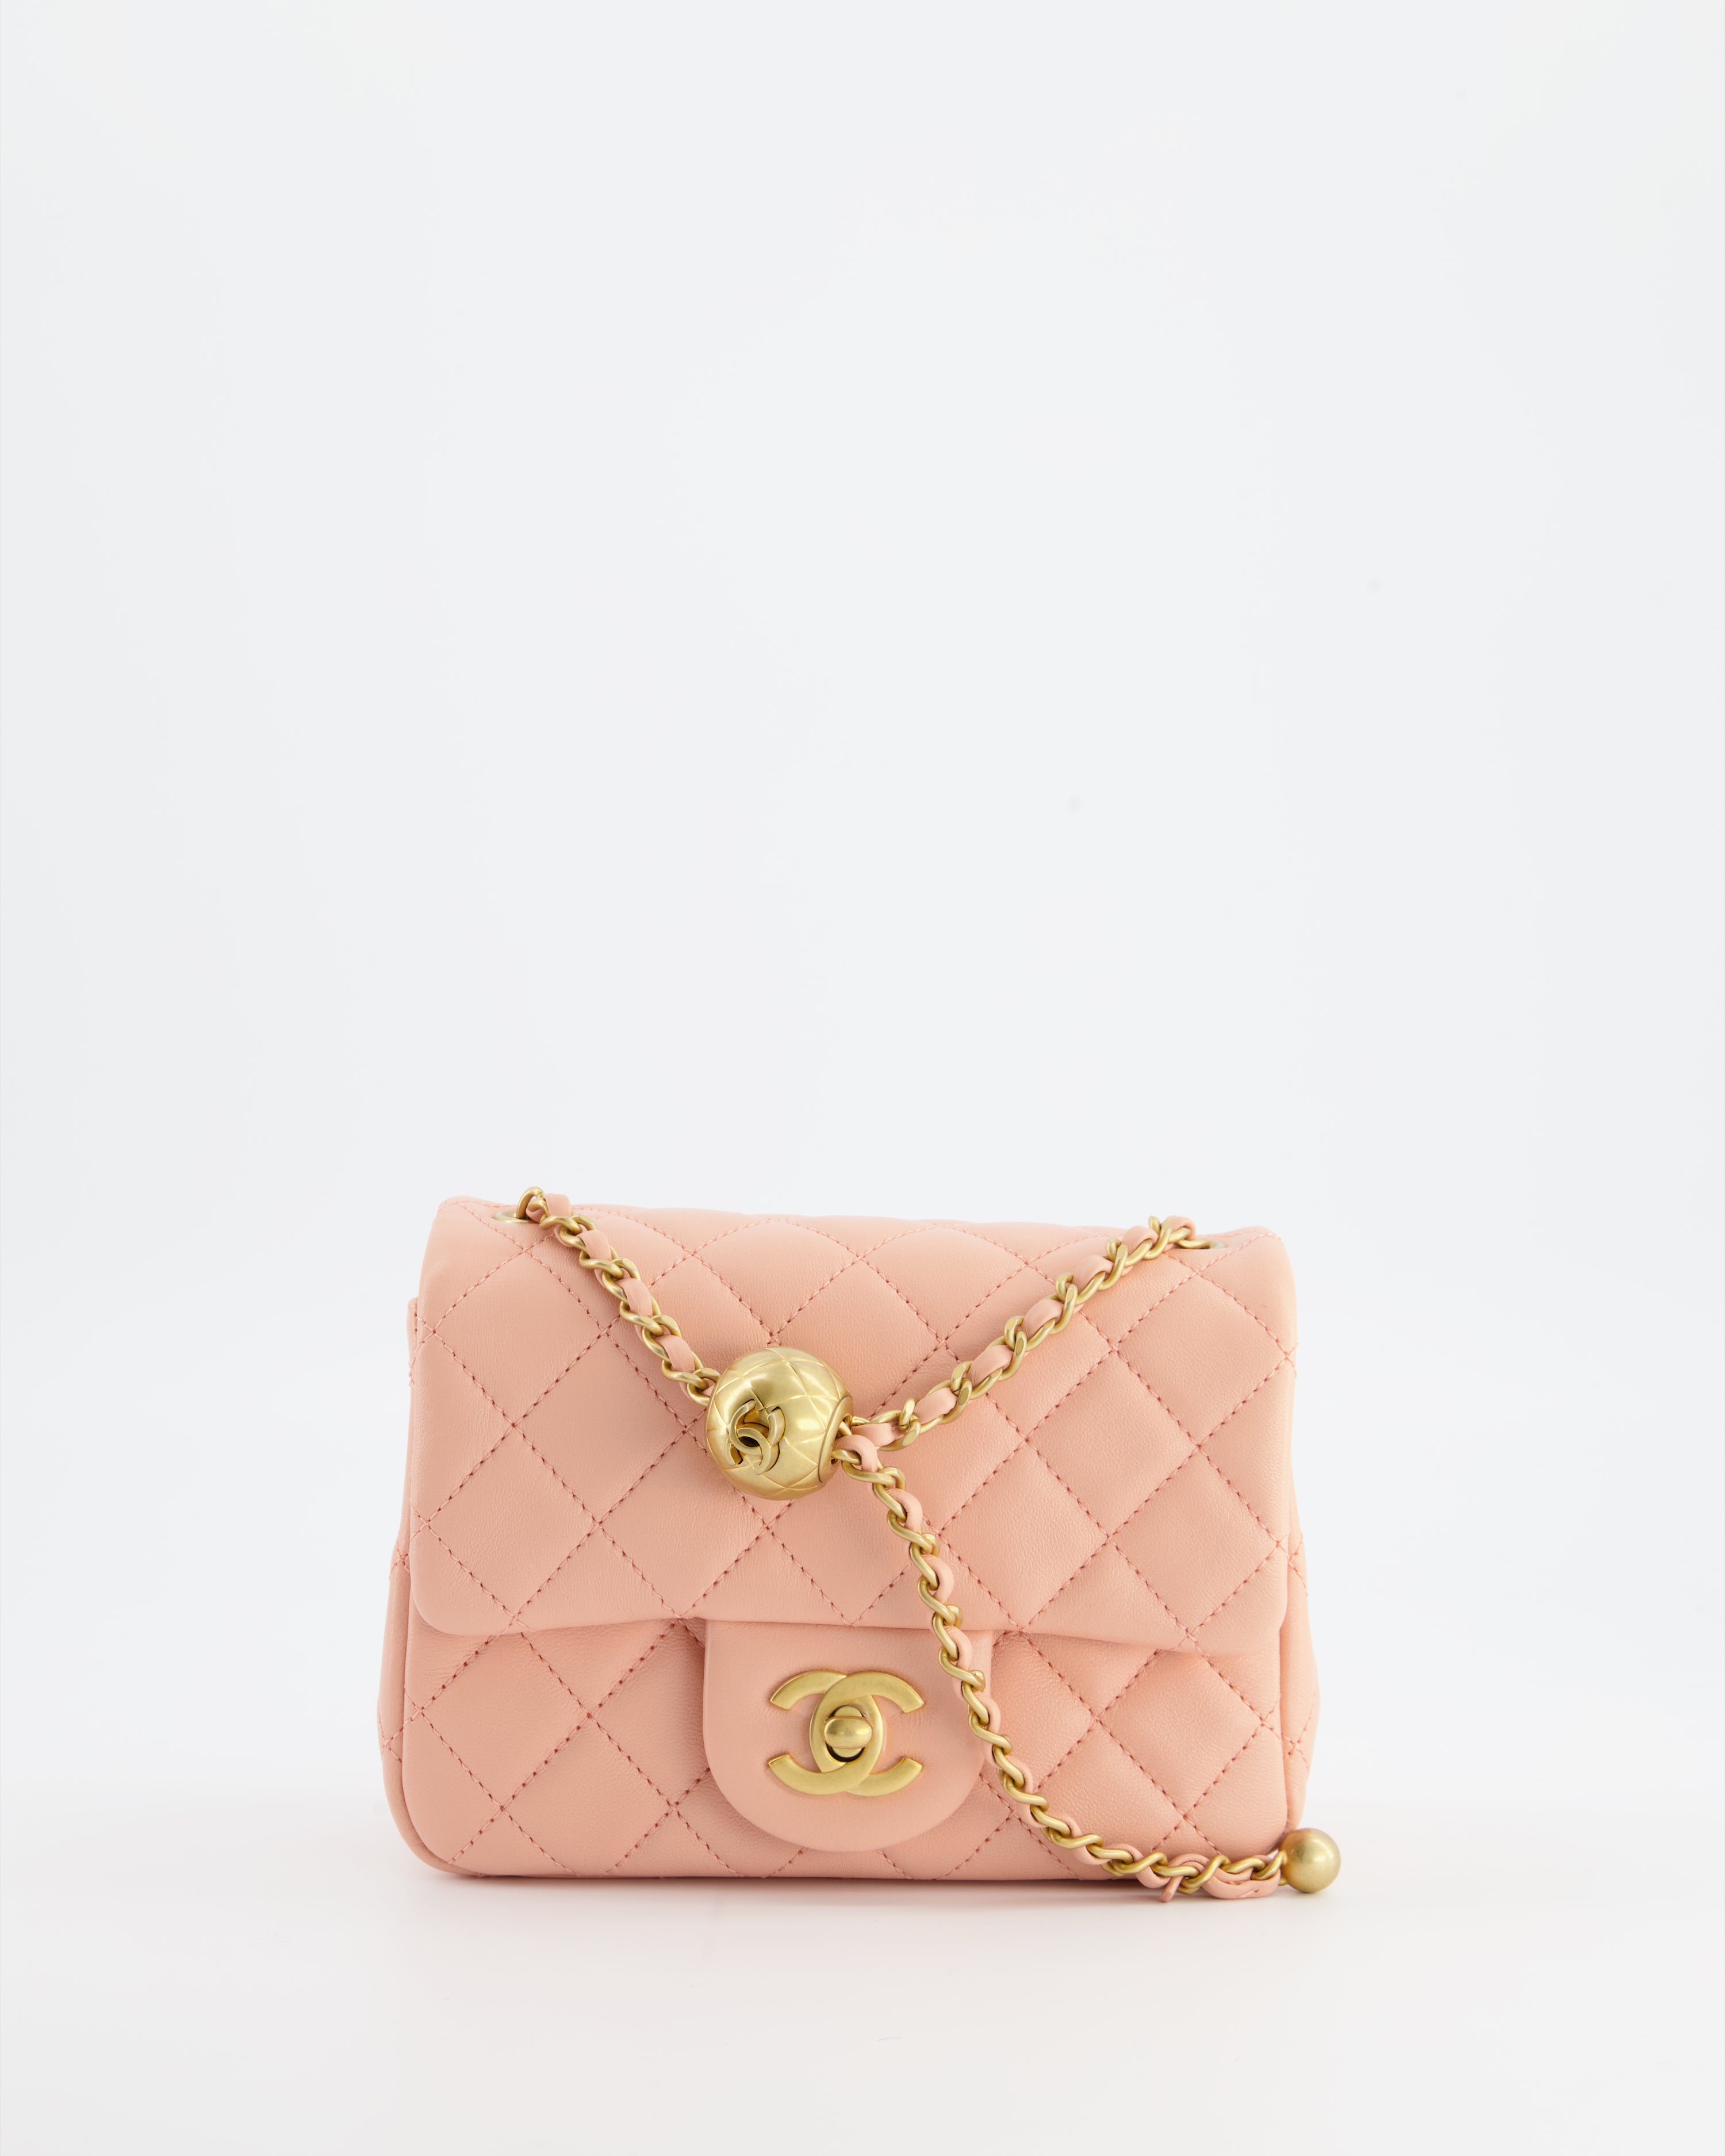 Chanel Vintage Micro Flap Bag